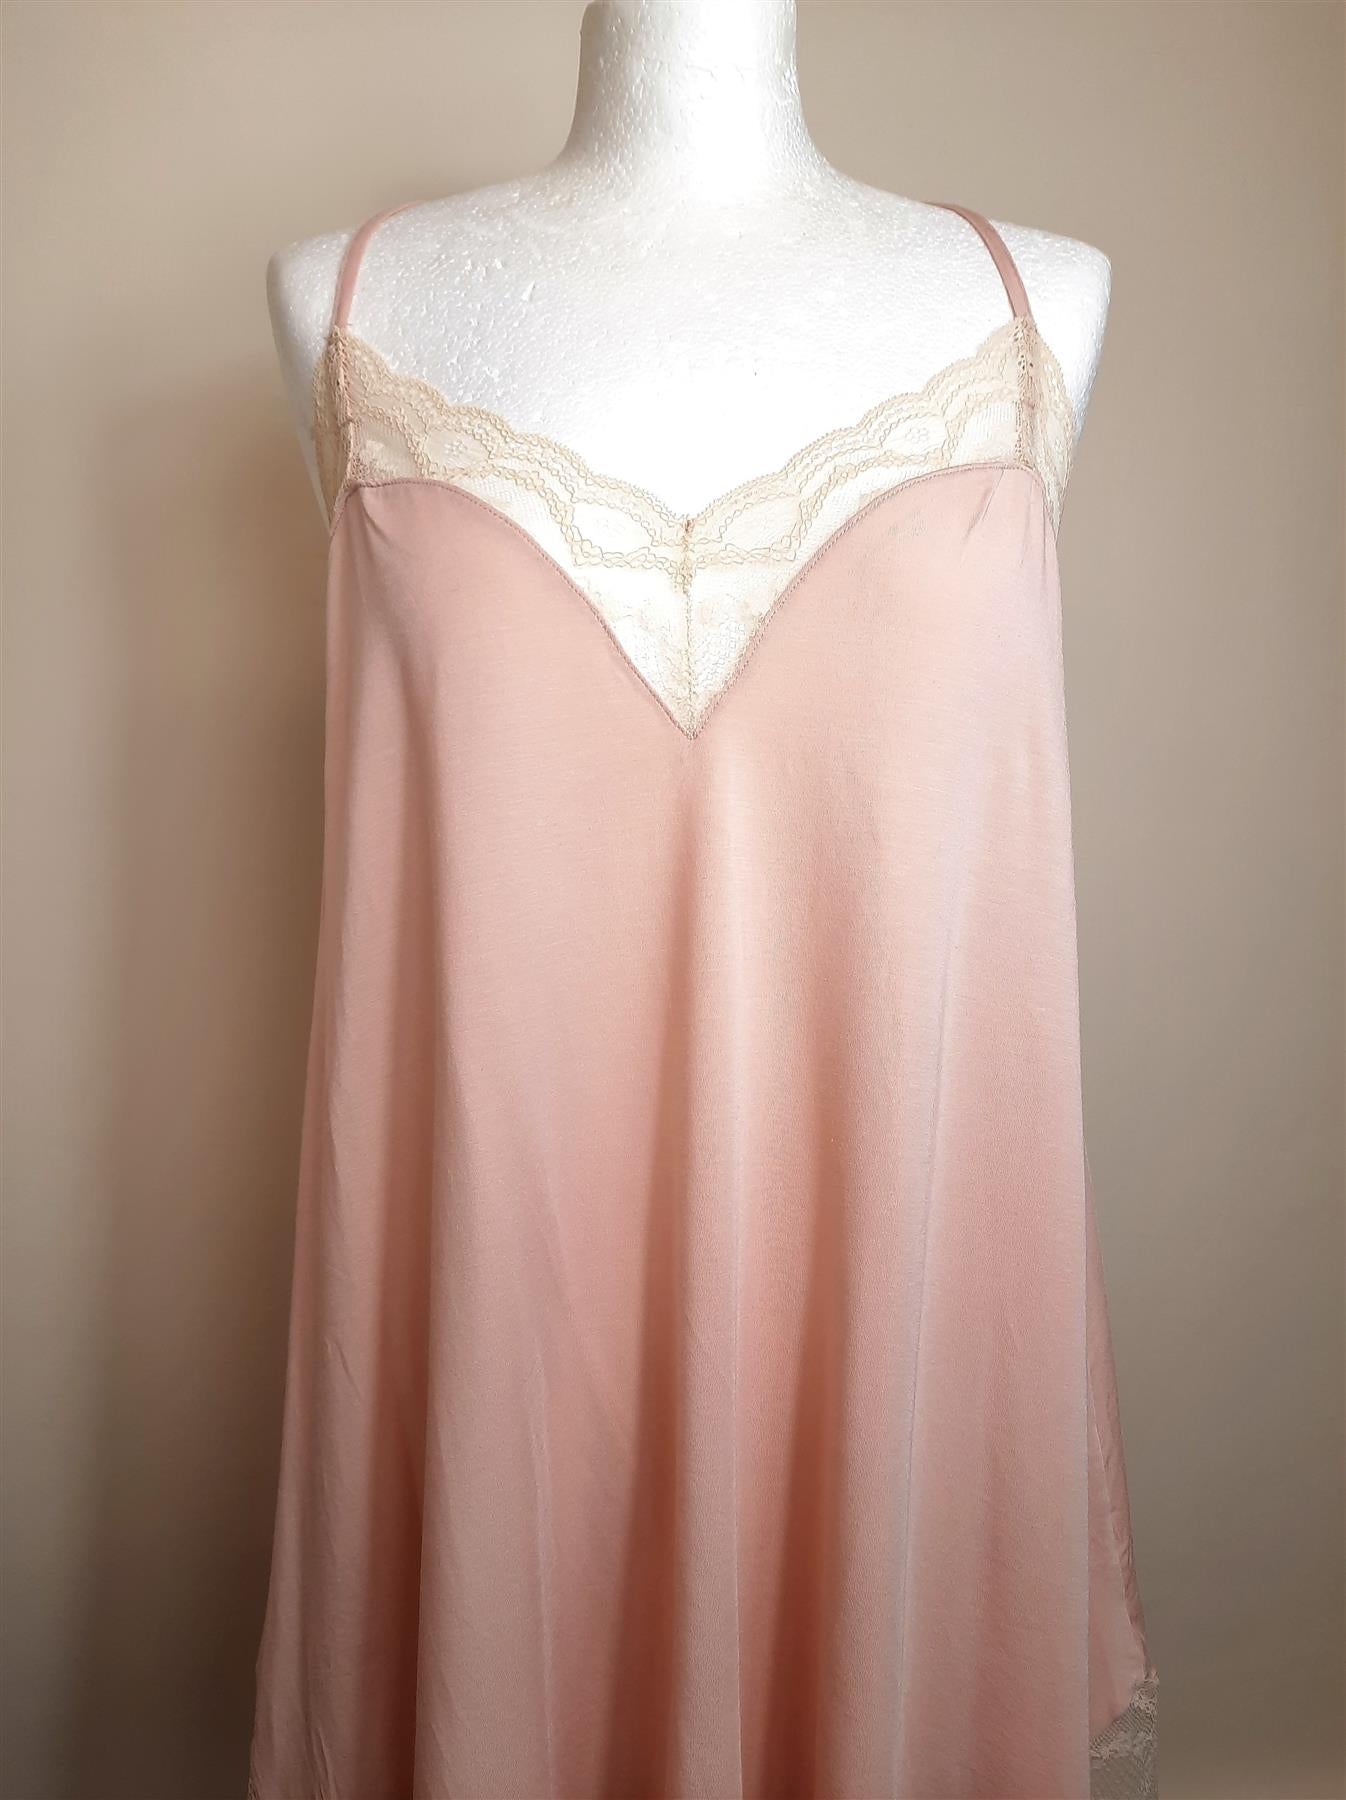 Women's Nightdress Supersoft Comfort Pink Lace Pyjama Nightie Size 14-16 New